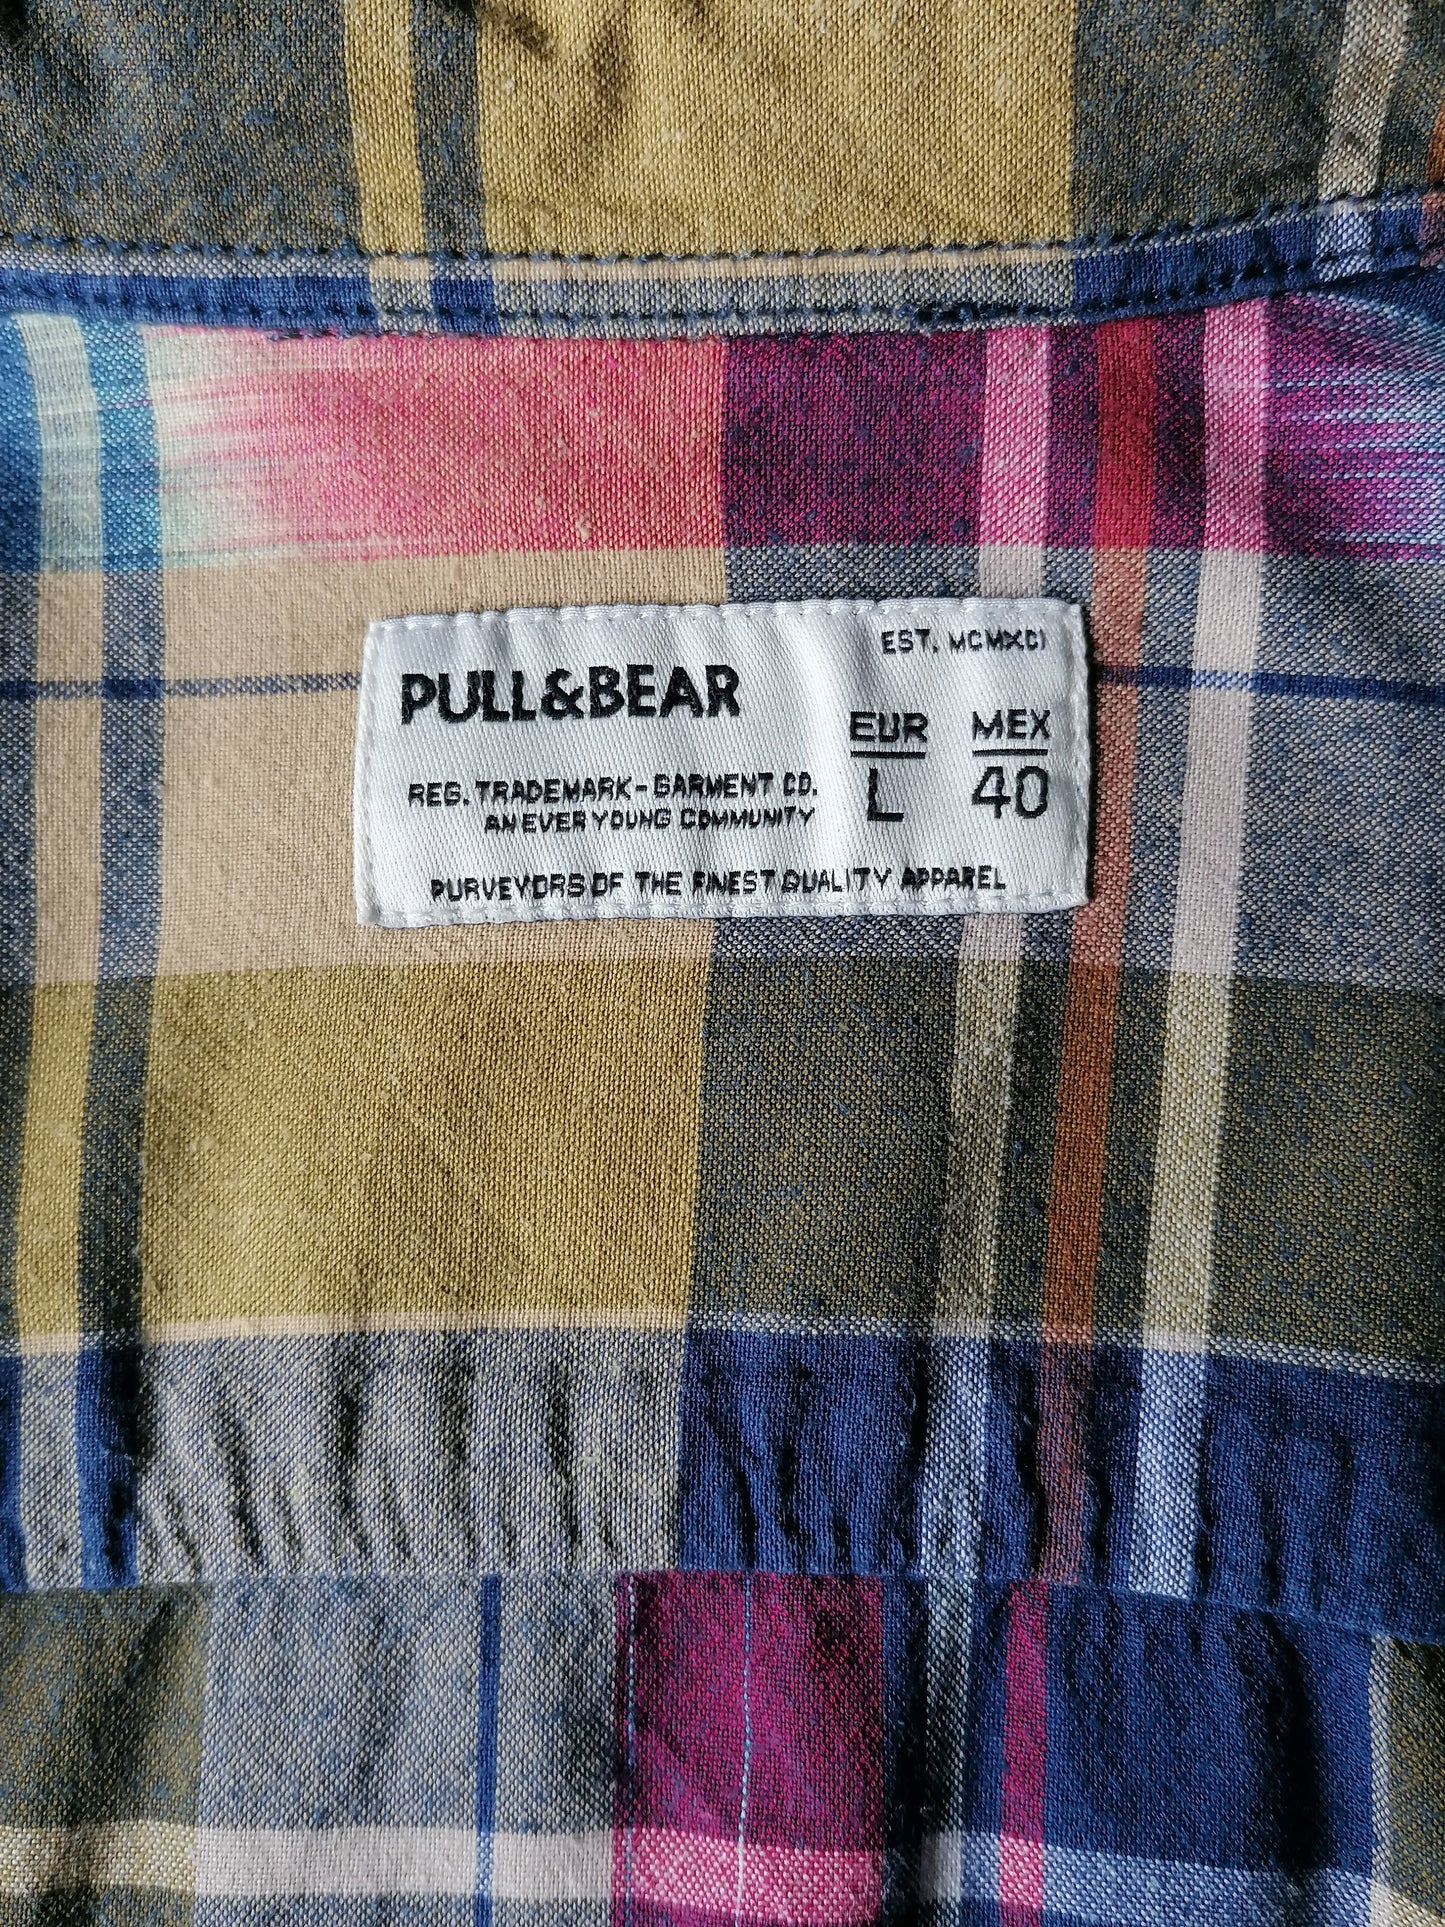 Pull & Bear overhemd. Geel Blauw Rood geruit. Maat L.